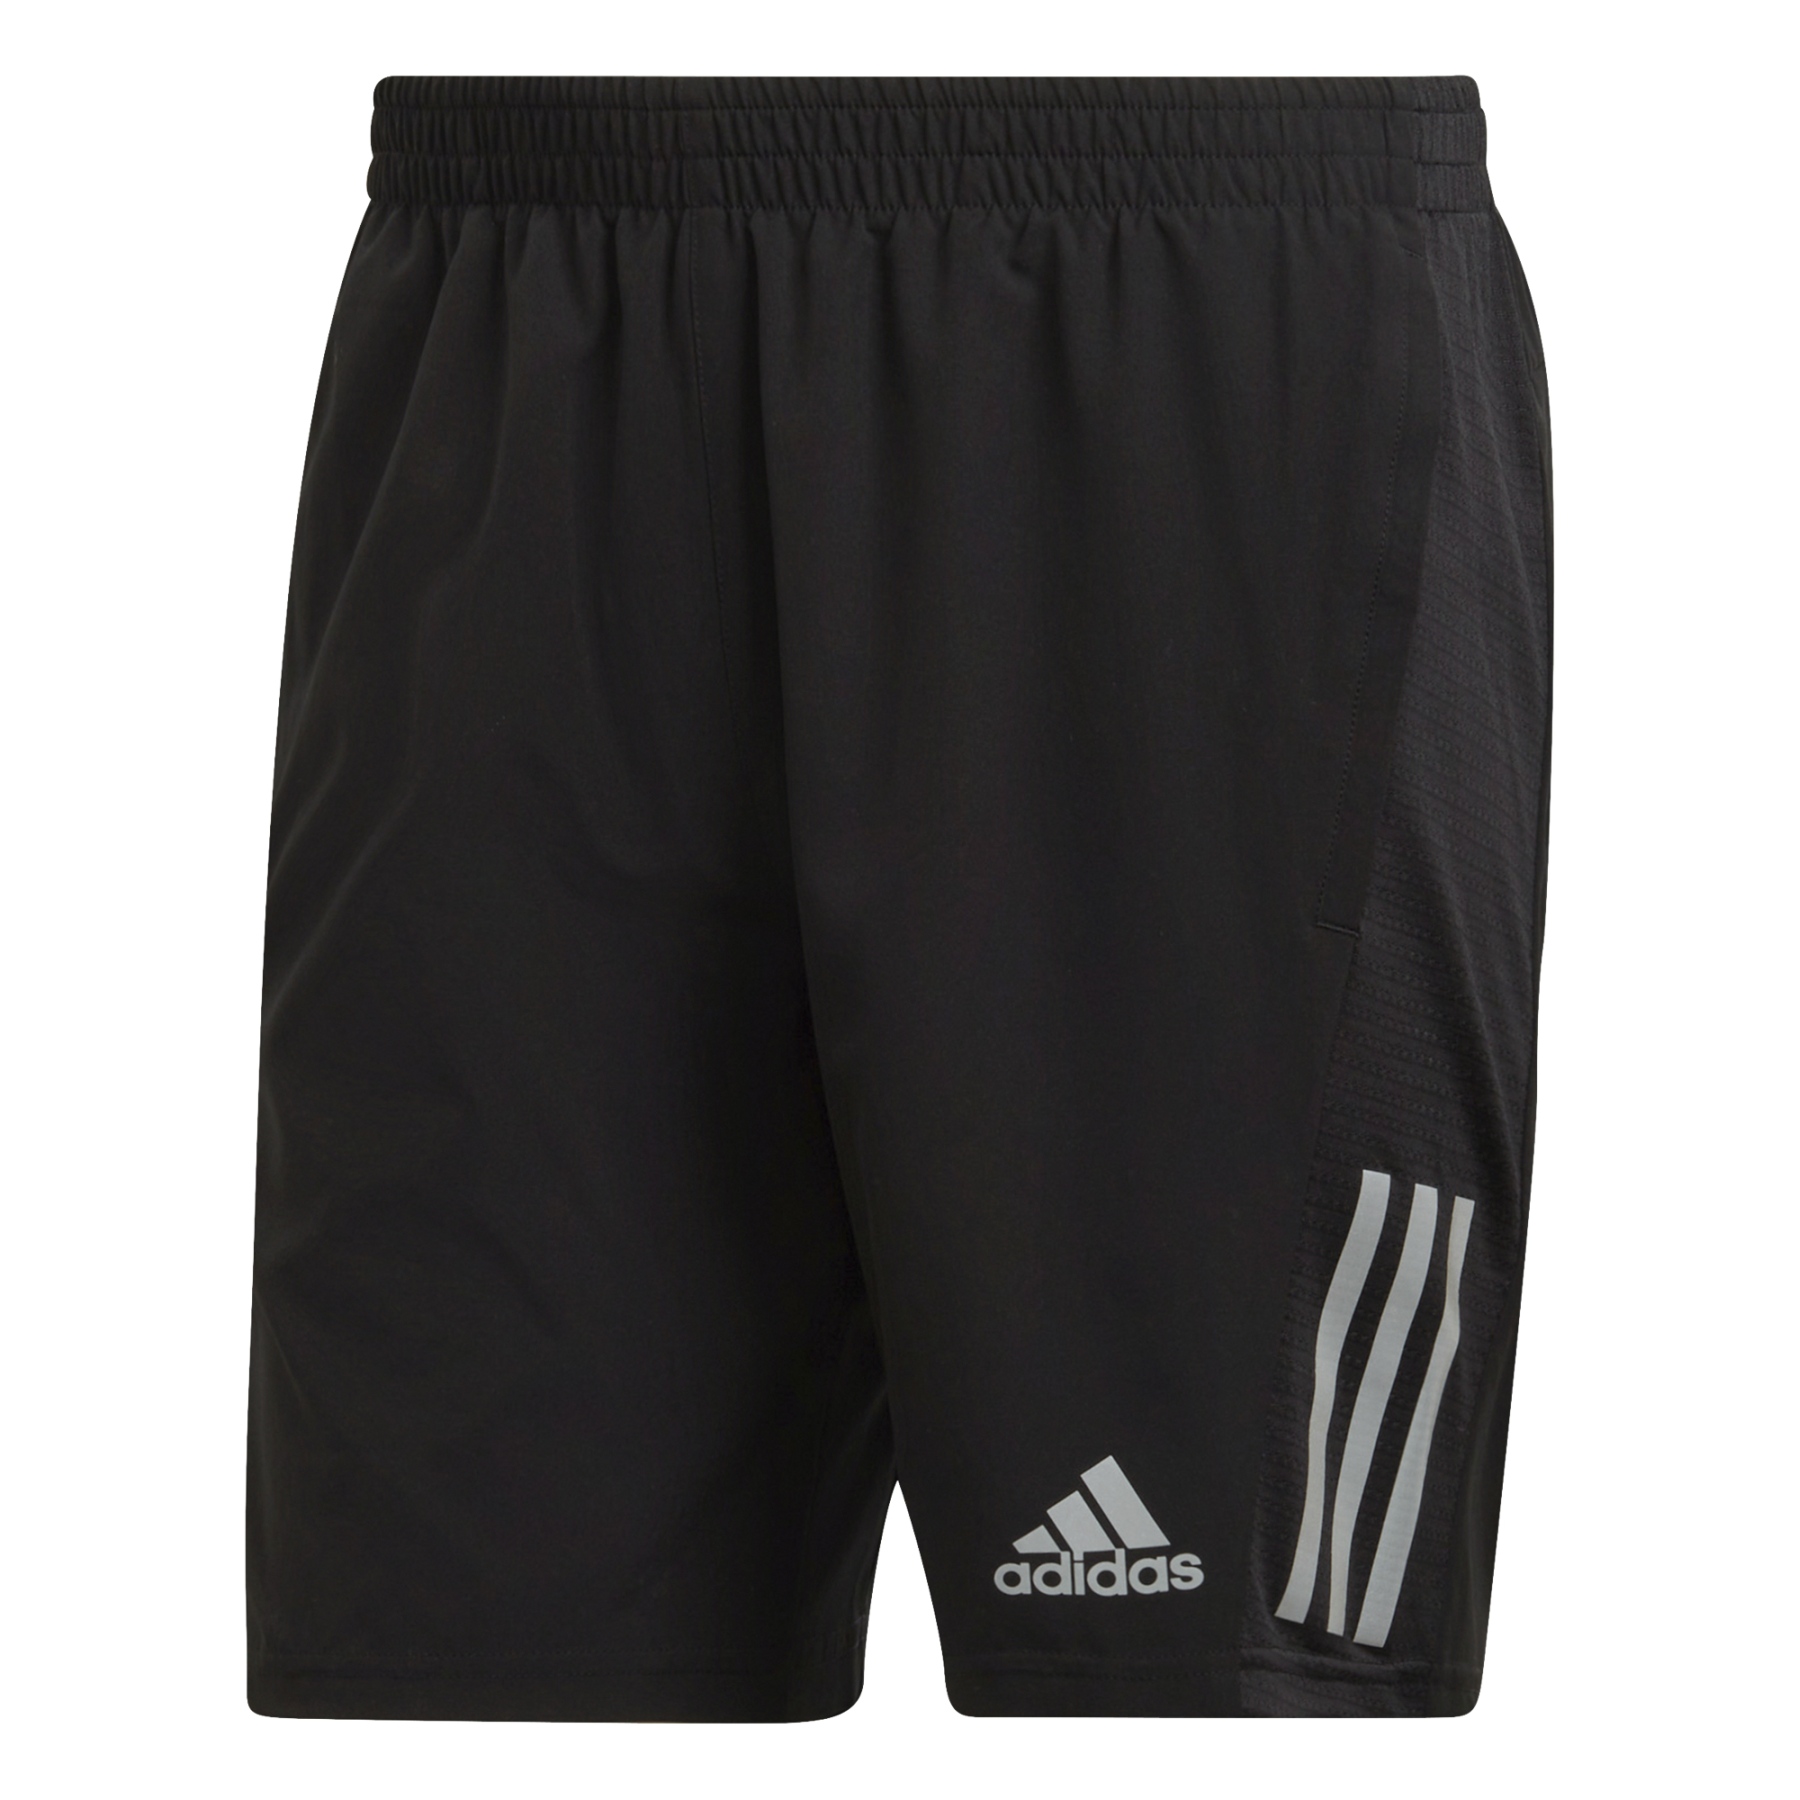 Image of adidas Own The Run 7" Shorts Men - black/reflective silver H58593